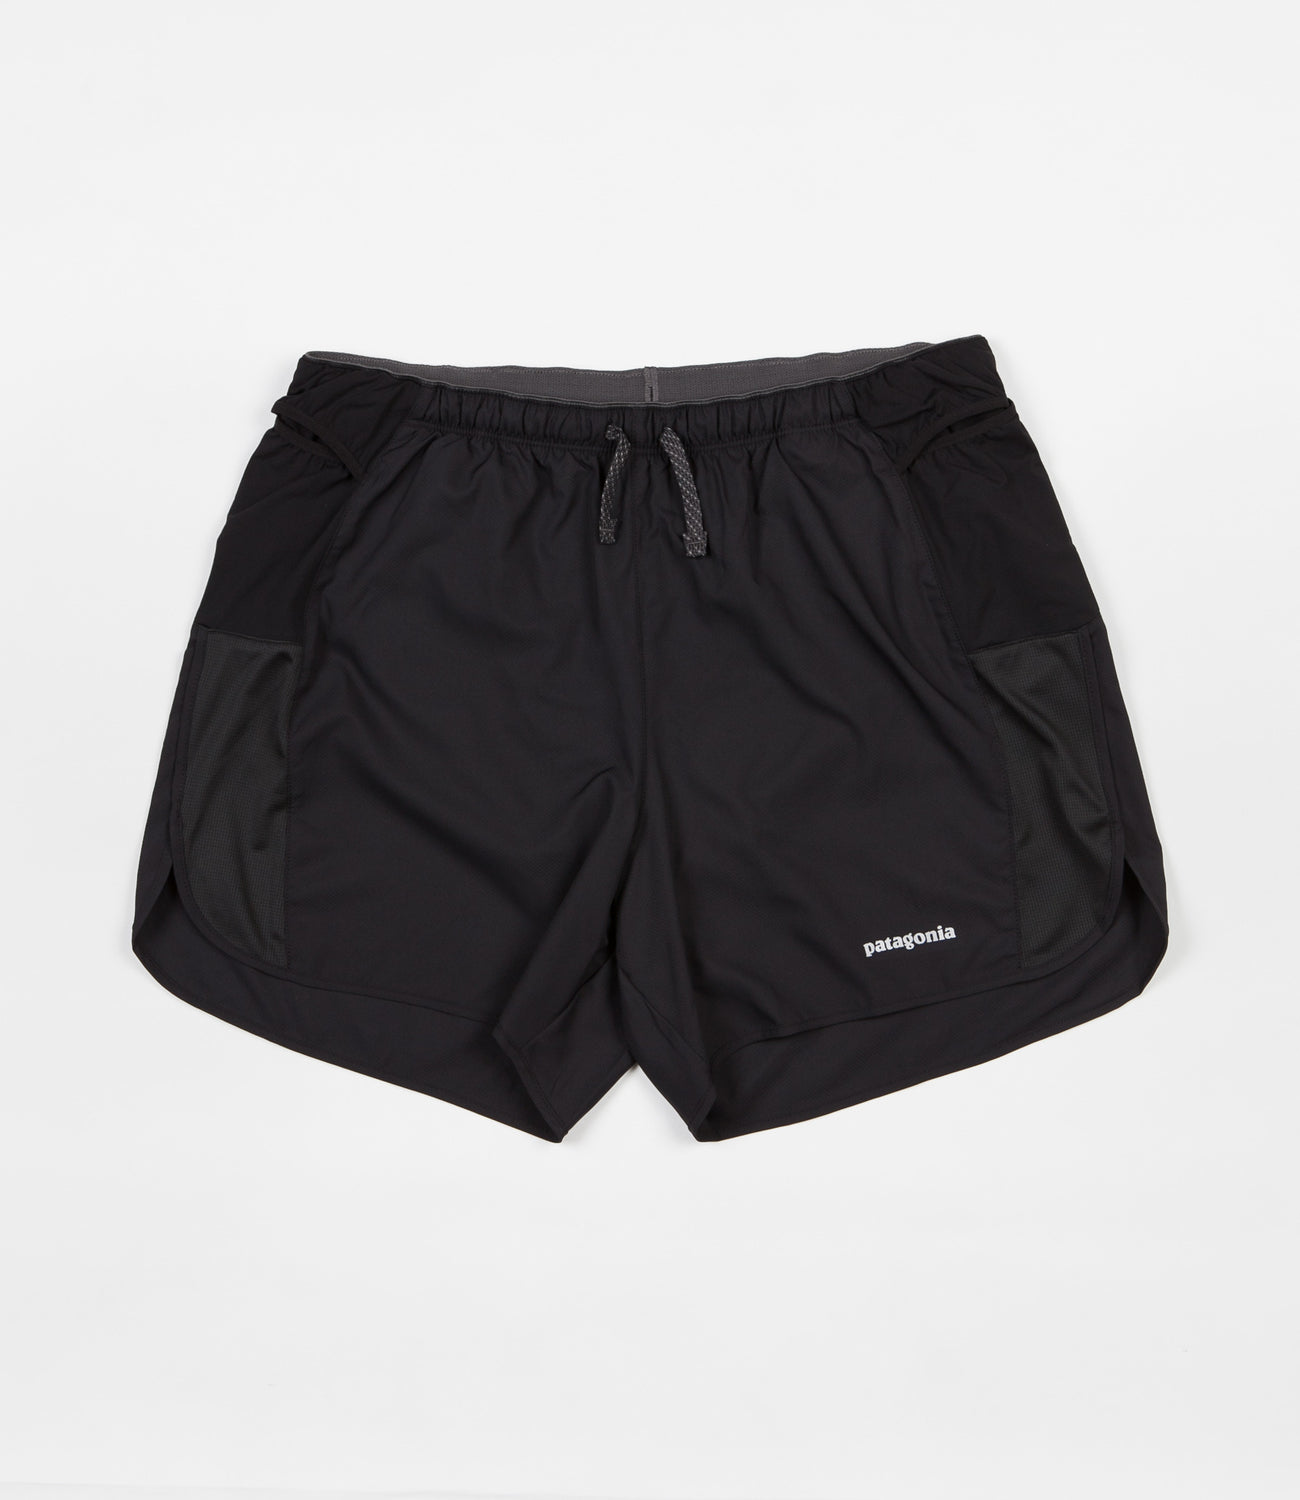 Patagonia Strider Pro Shorts - Black | Flatspot